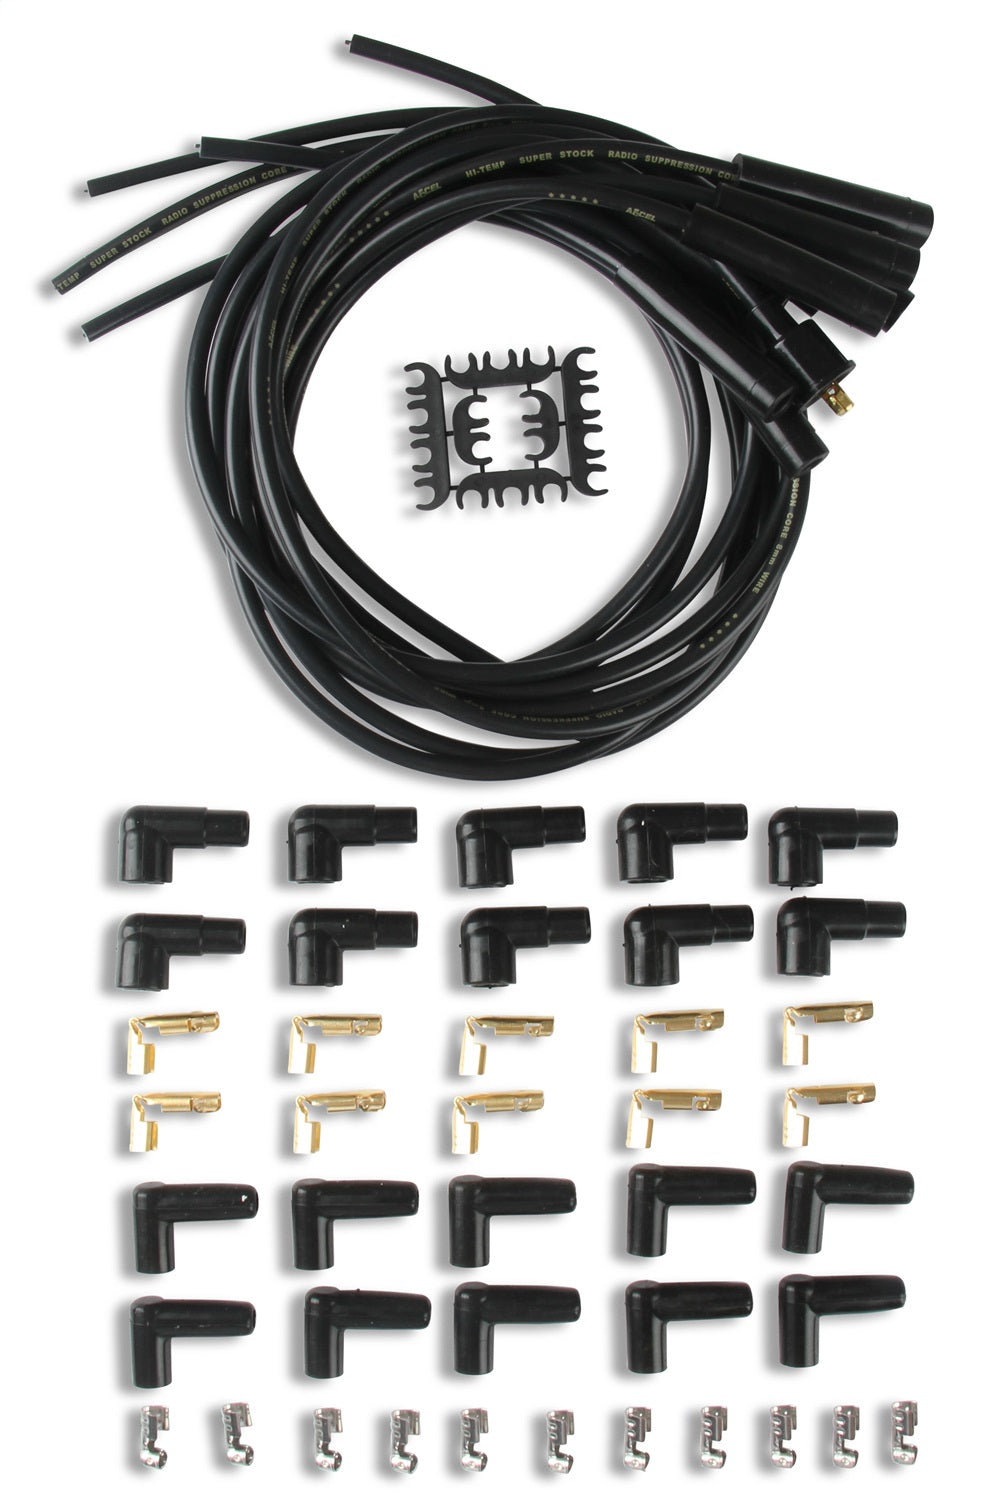 ACCEL 4040K Universal Fit Spark Plug Wire Set